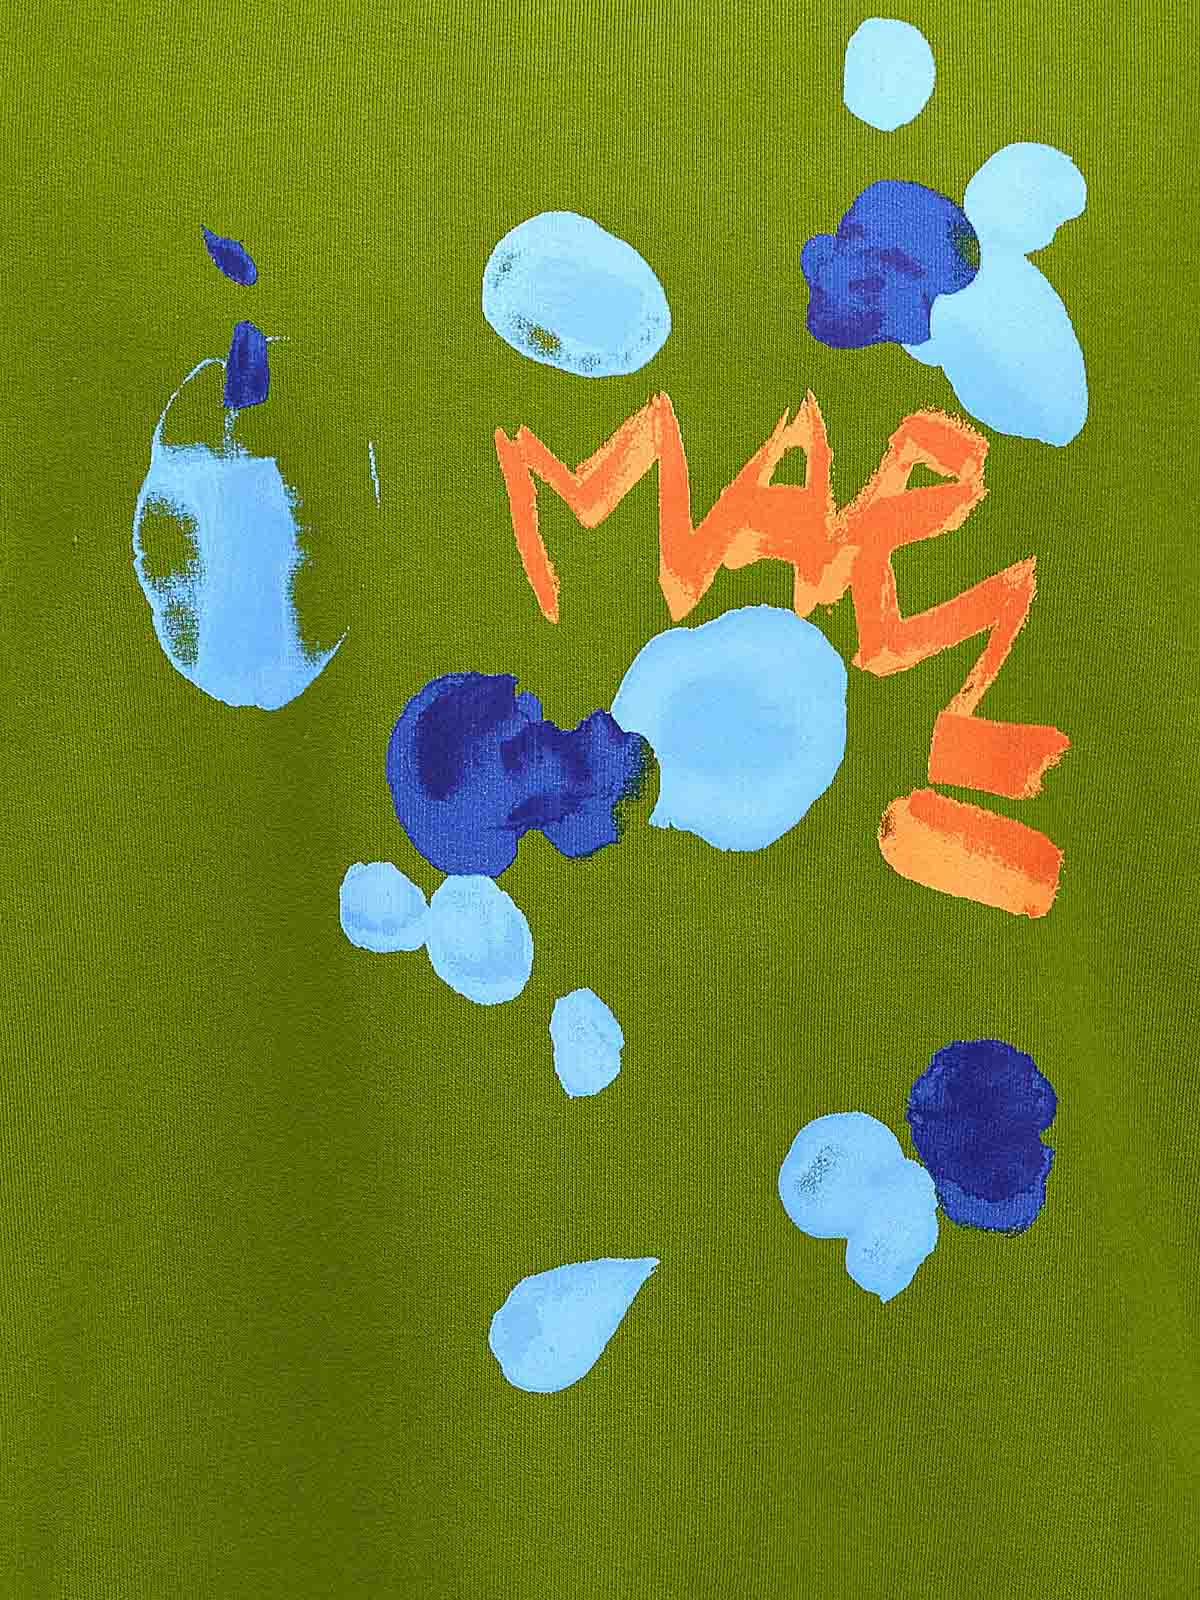 Shop Marni Print Sweatshirt In Verde